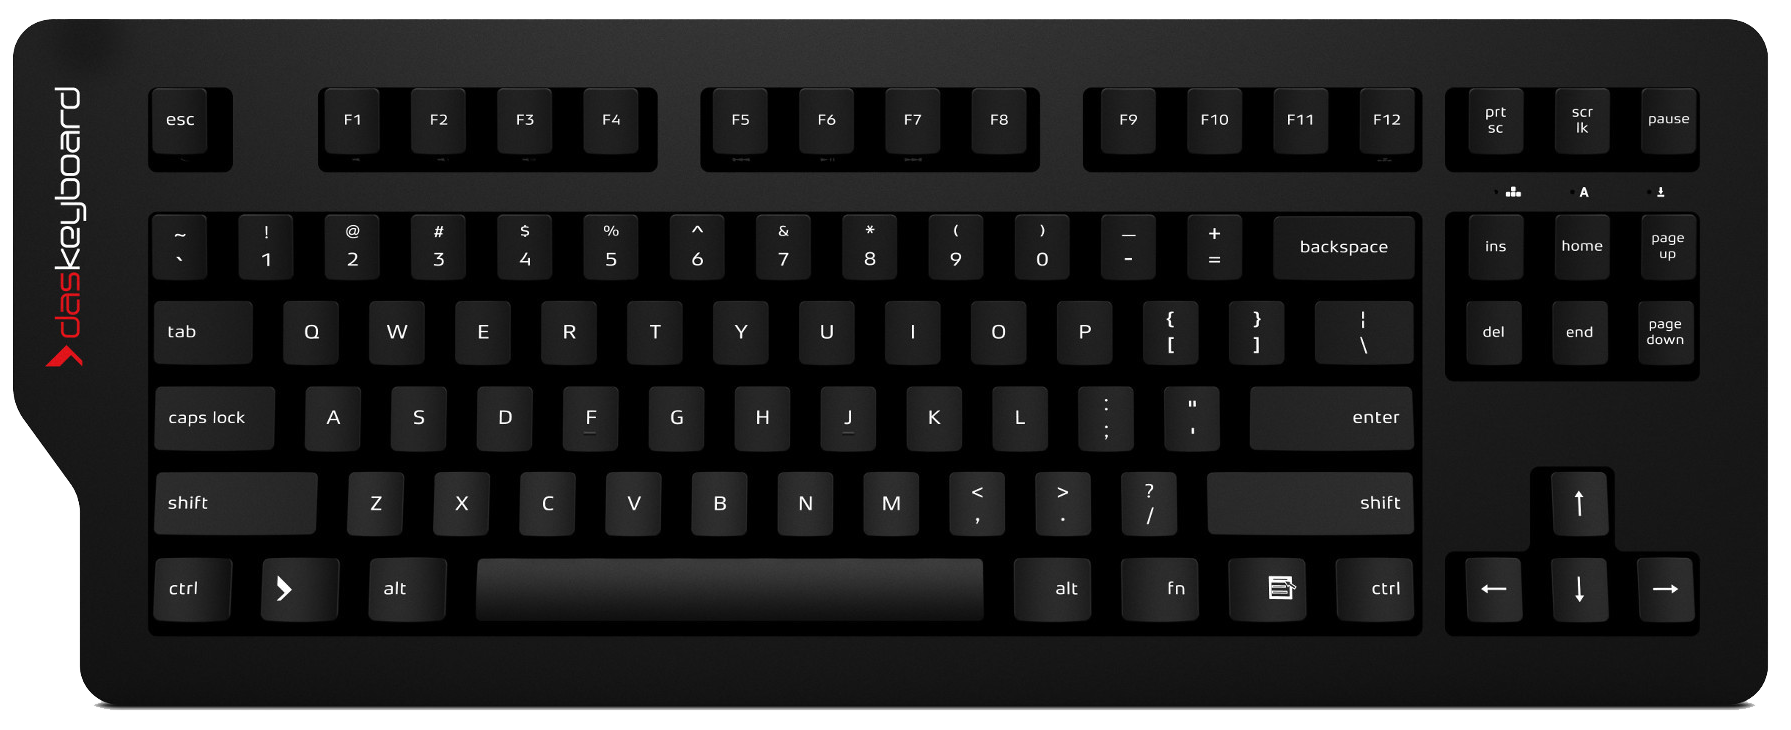 Download PNG image - Keyboard PNG Image 